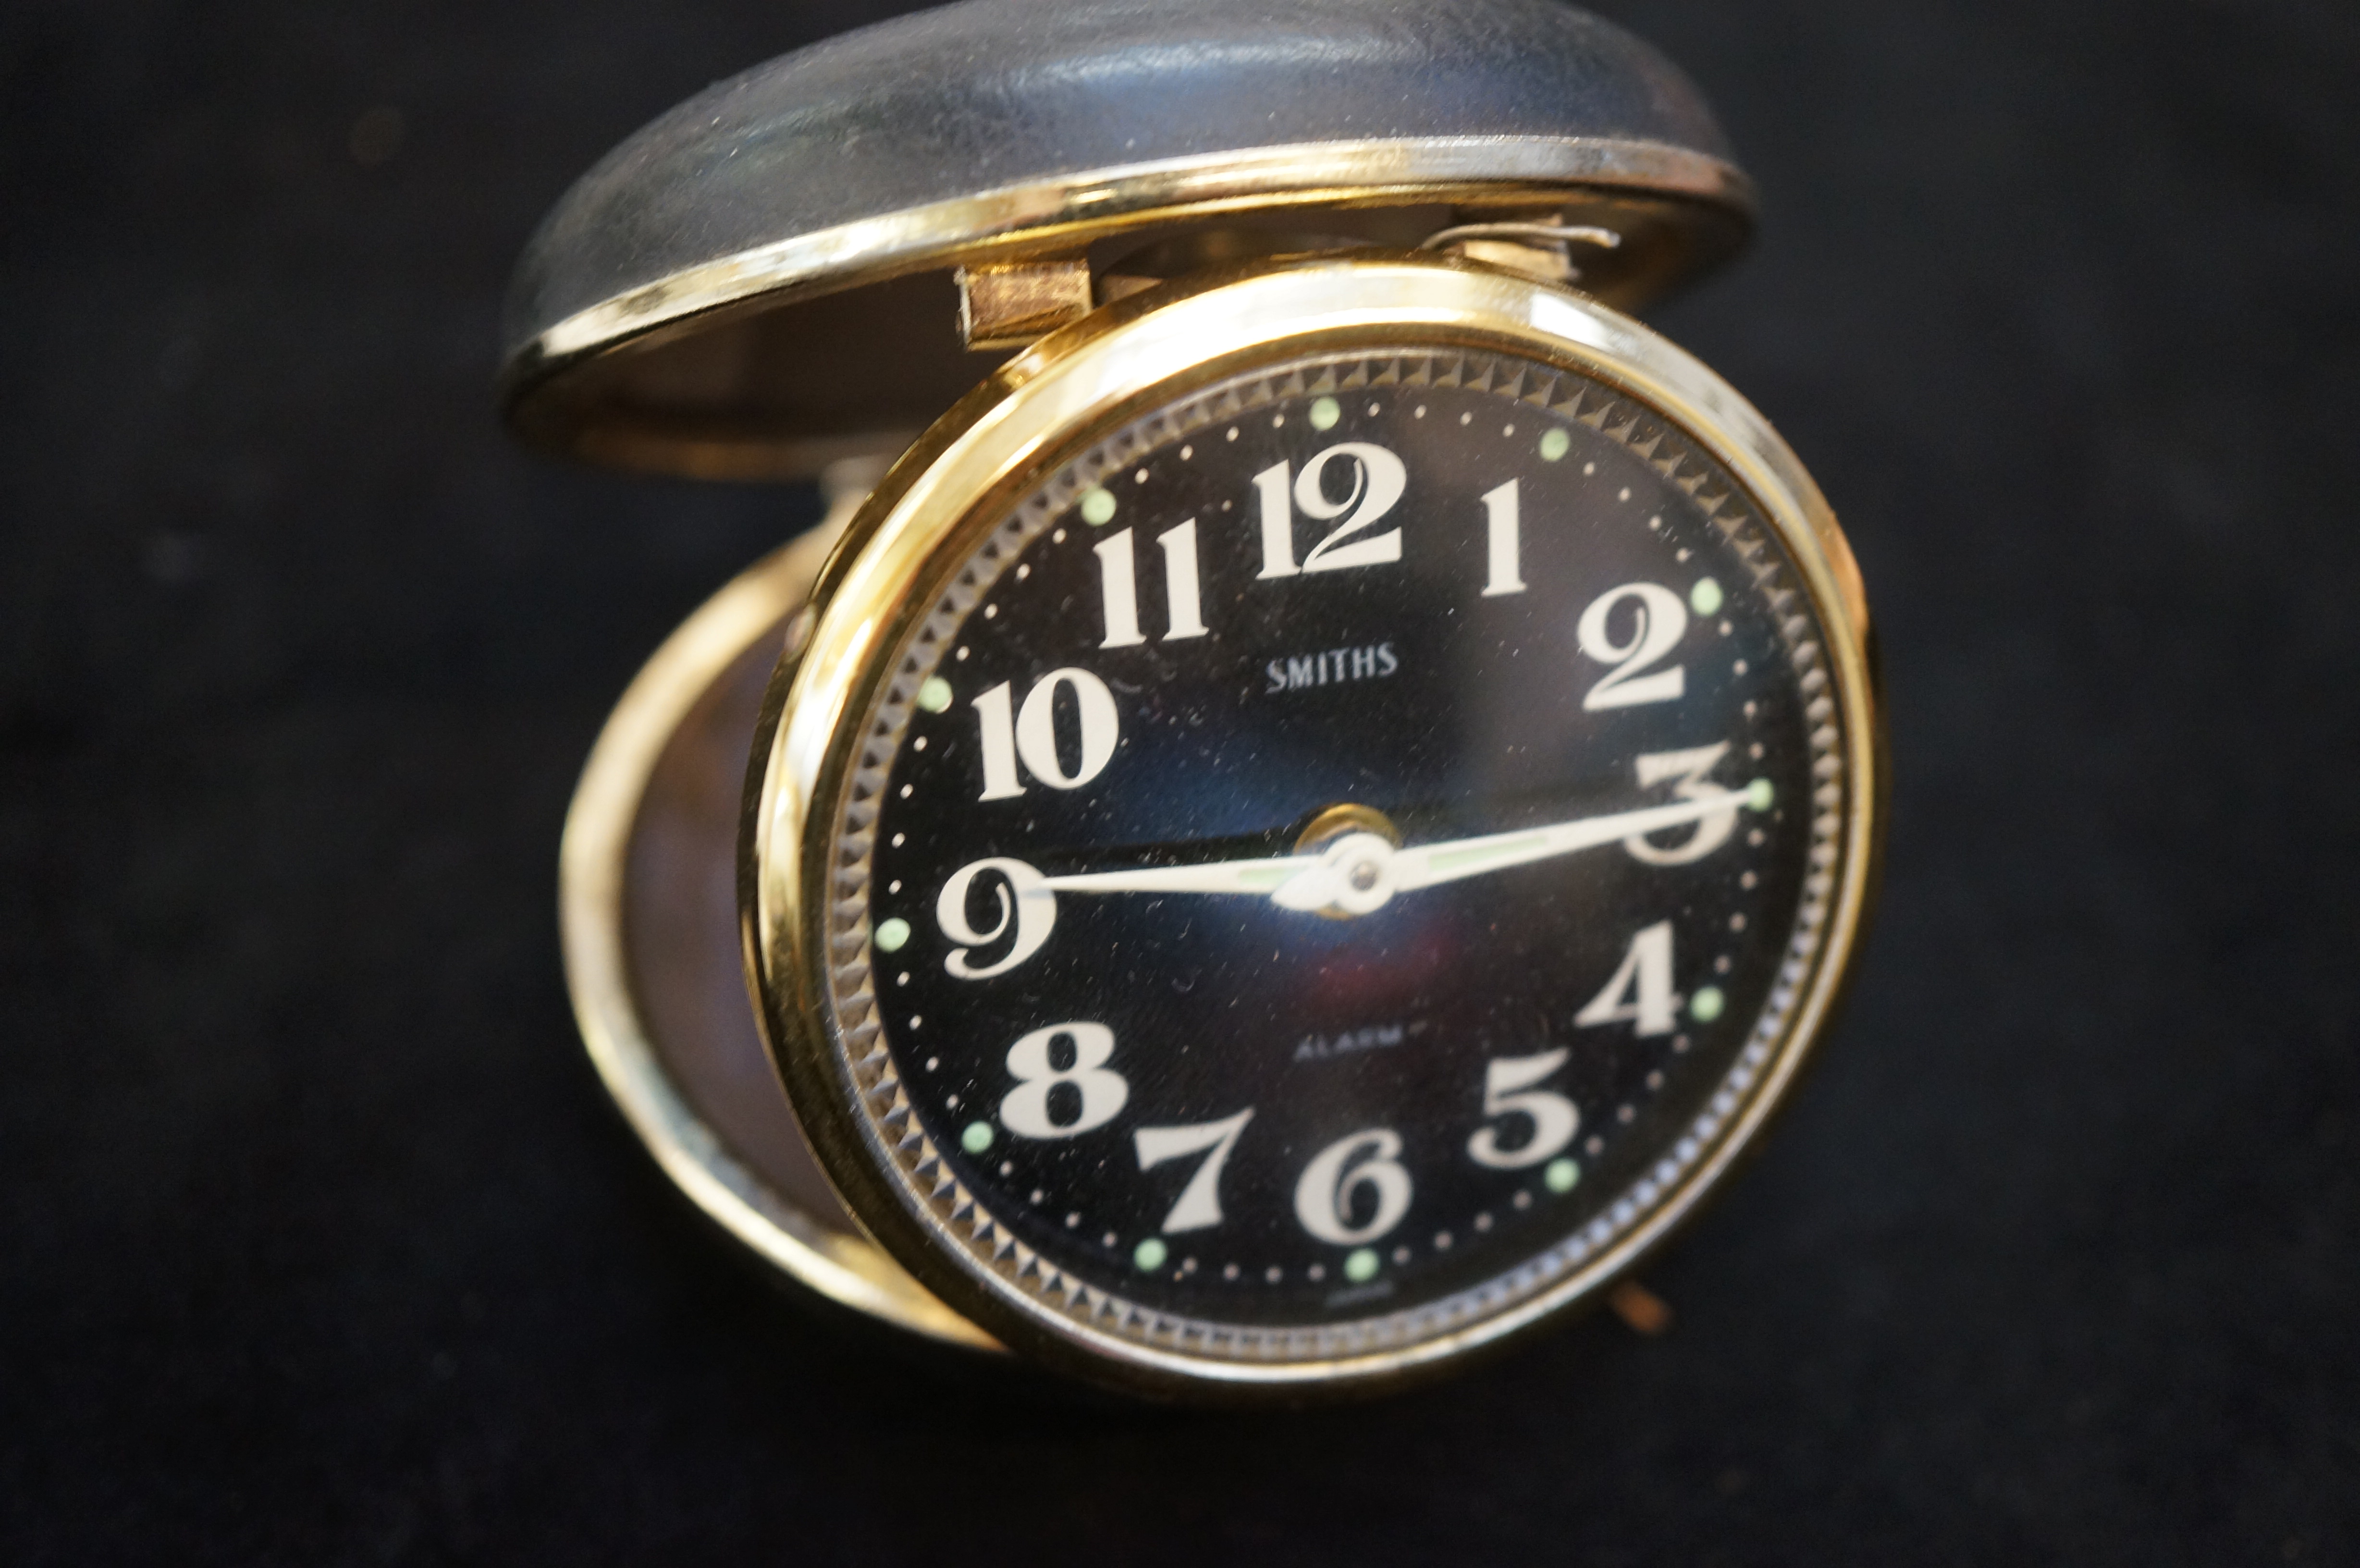 Vintage Smiths travel alarm clock